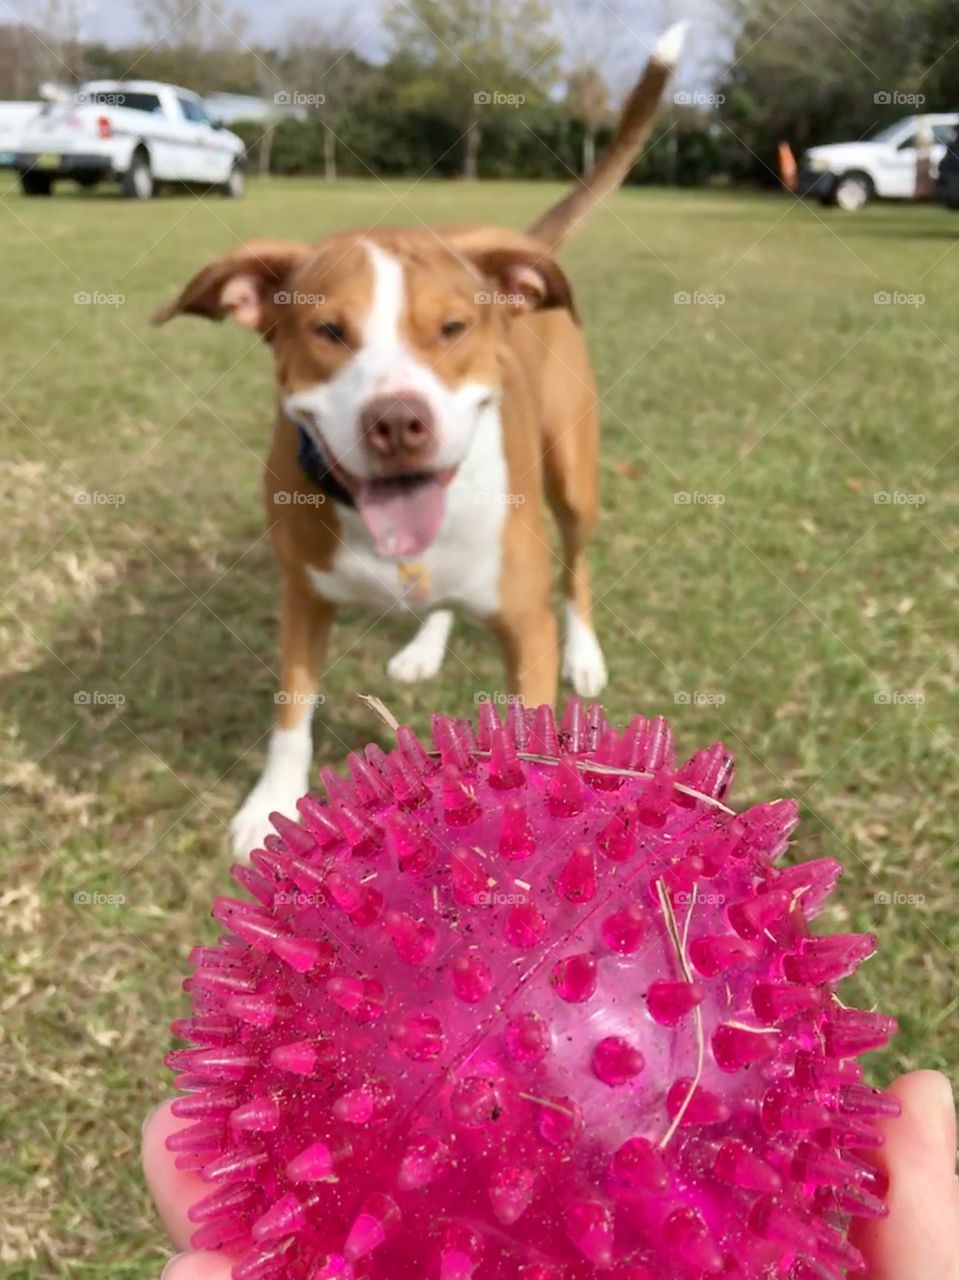 A good dog and his pink ball